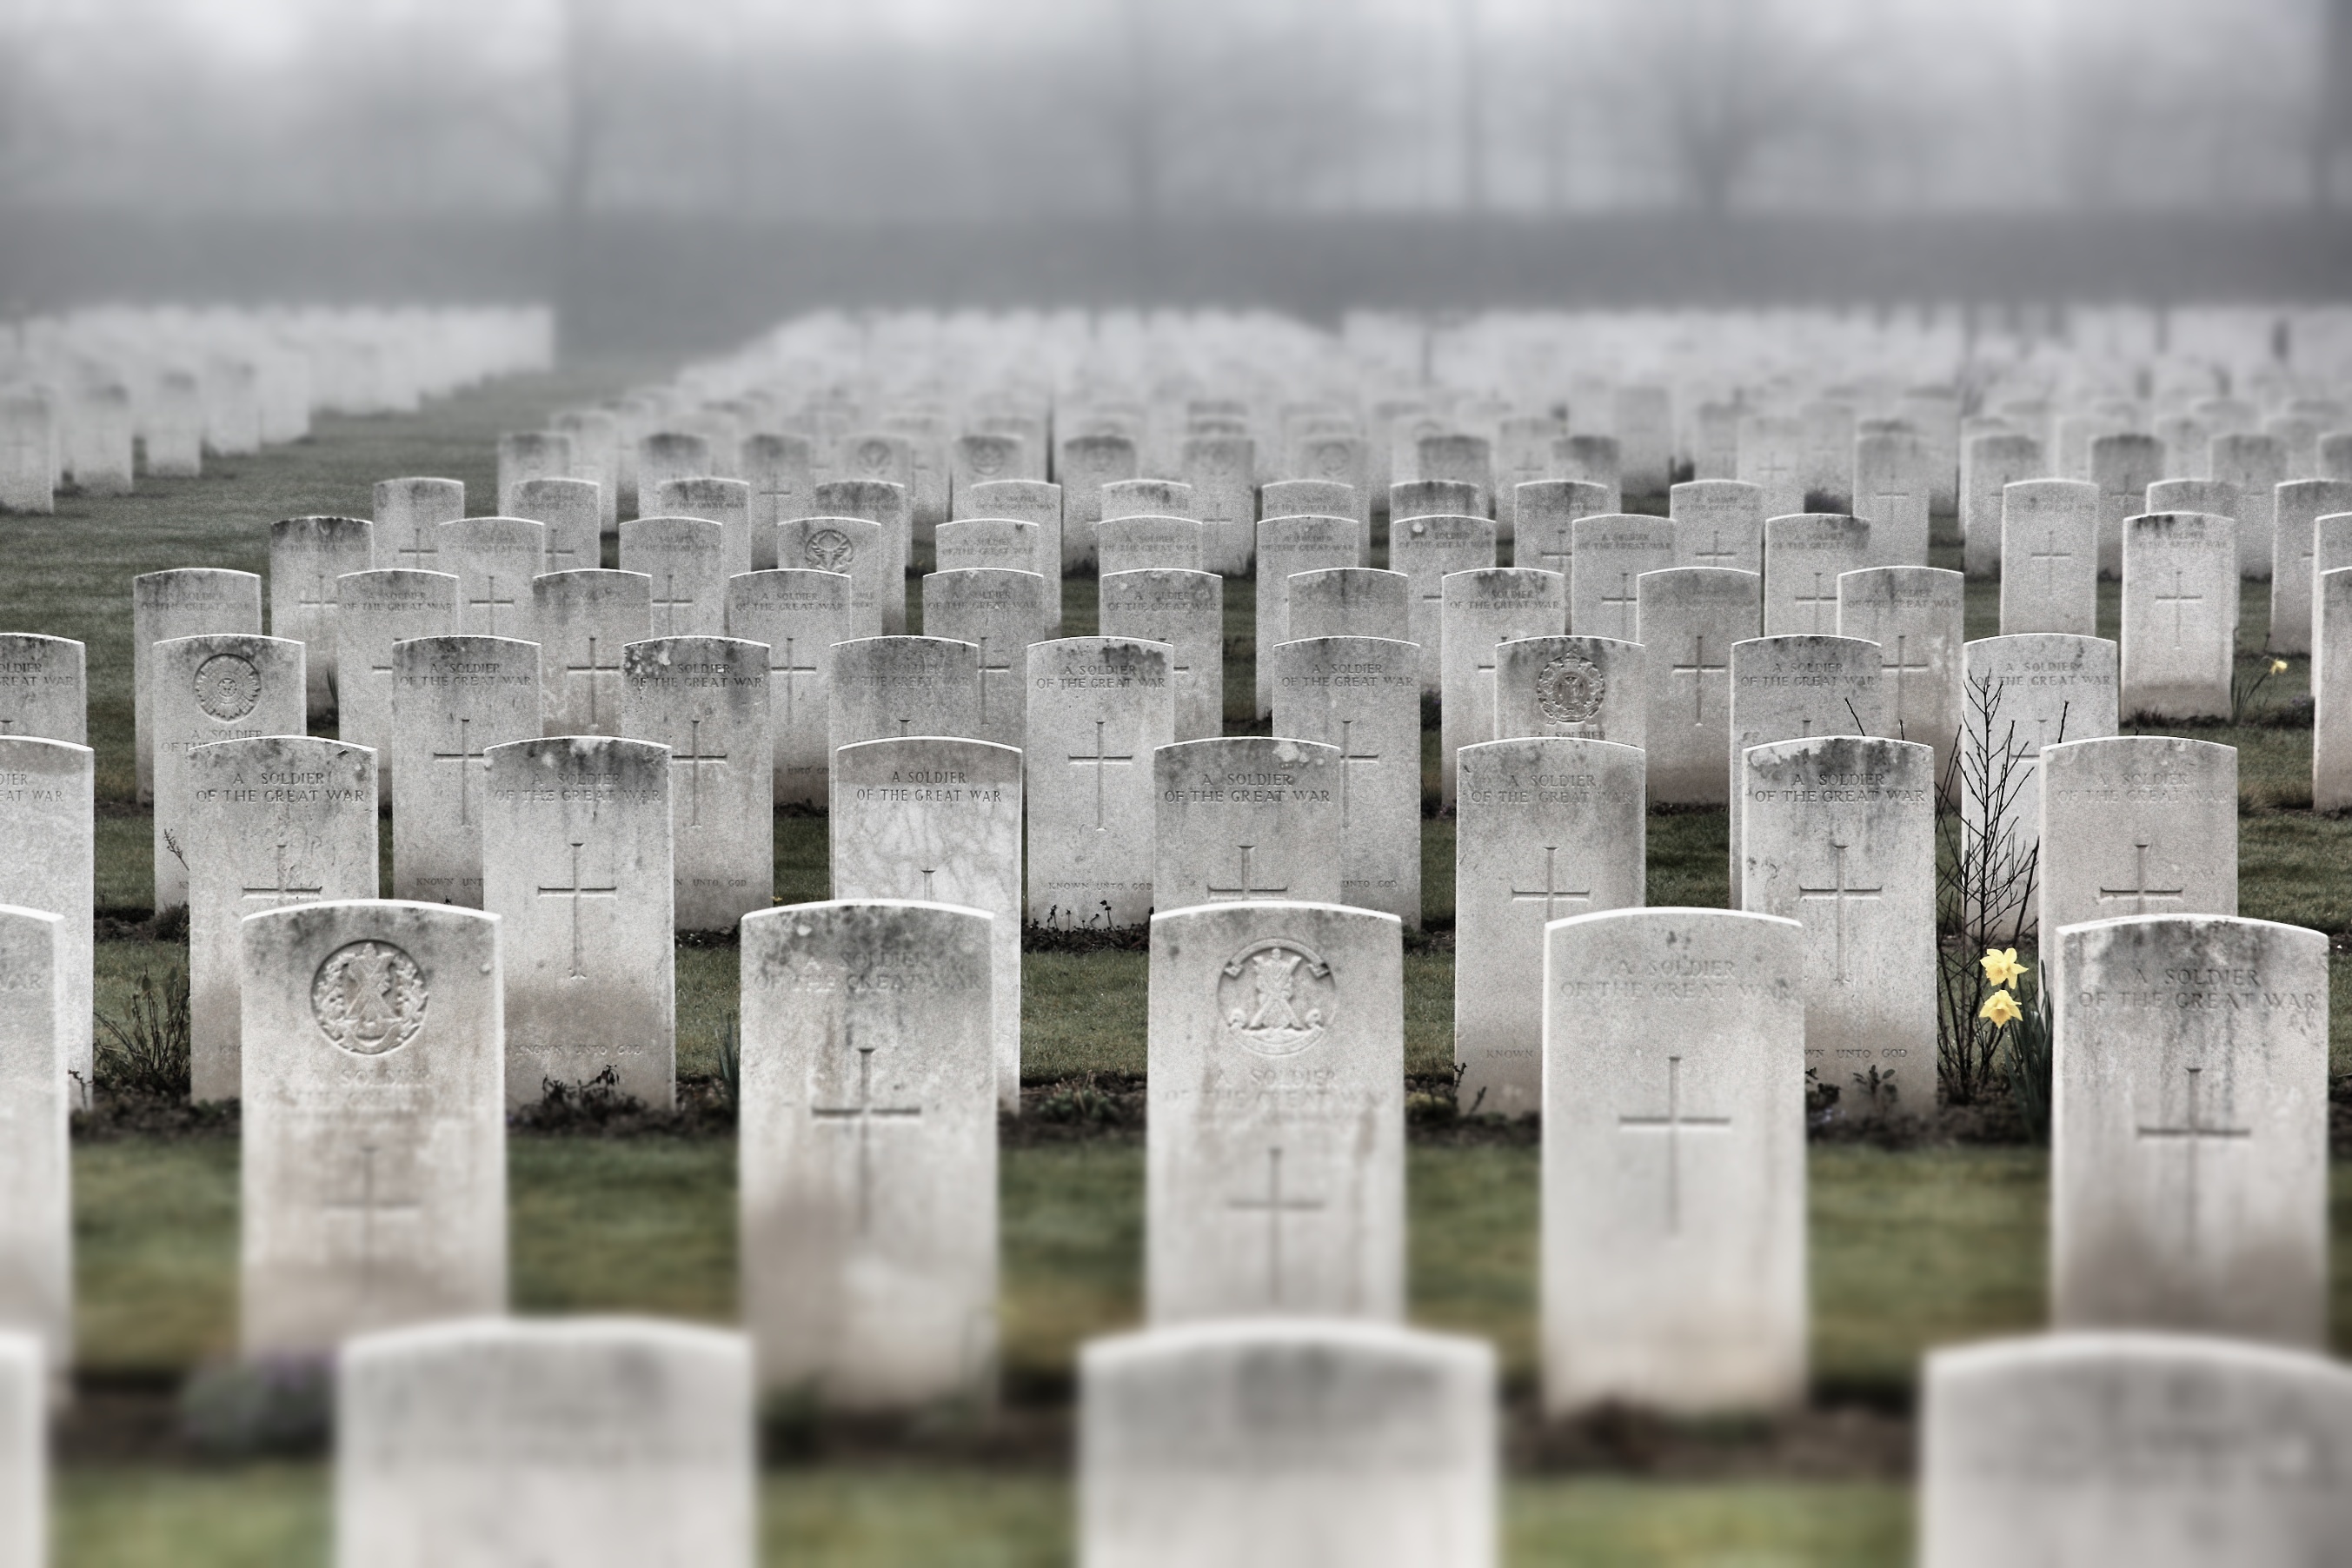 Headstones at the Loos British Cemetery in Loos-en-Gohelle, France.